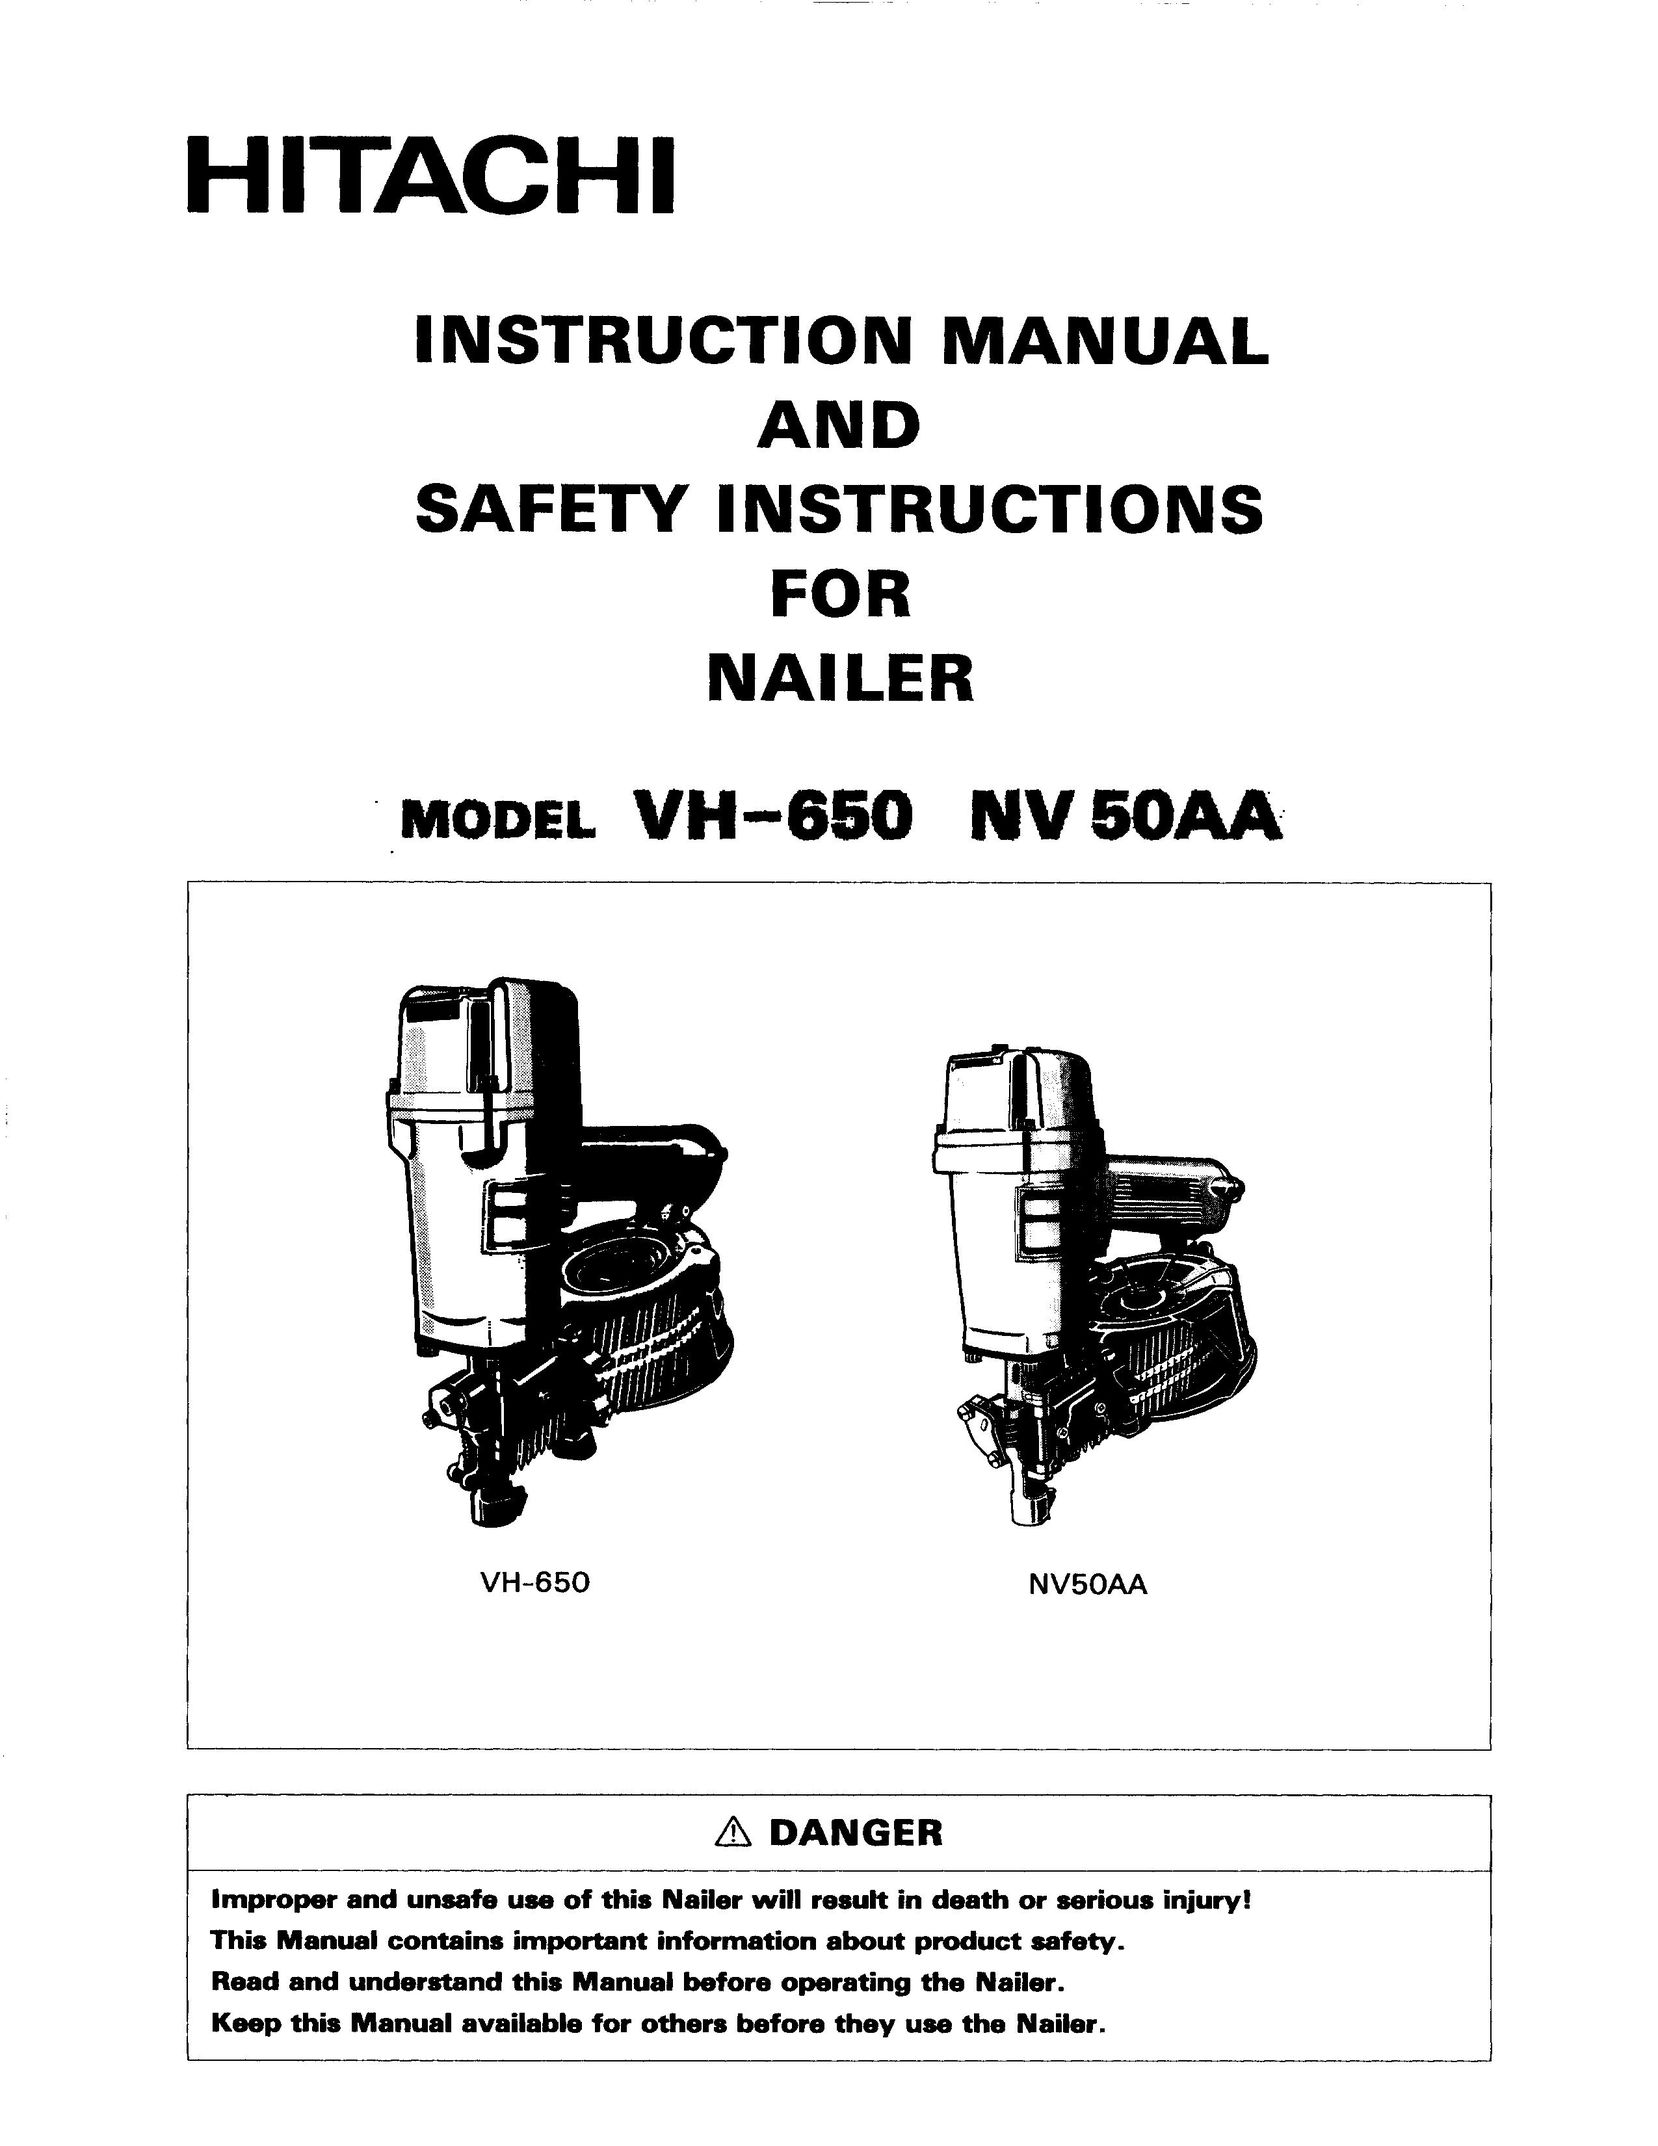 Hitachi VH-650 Nail Gun User Manual